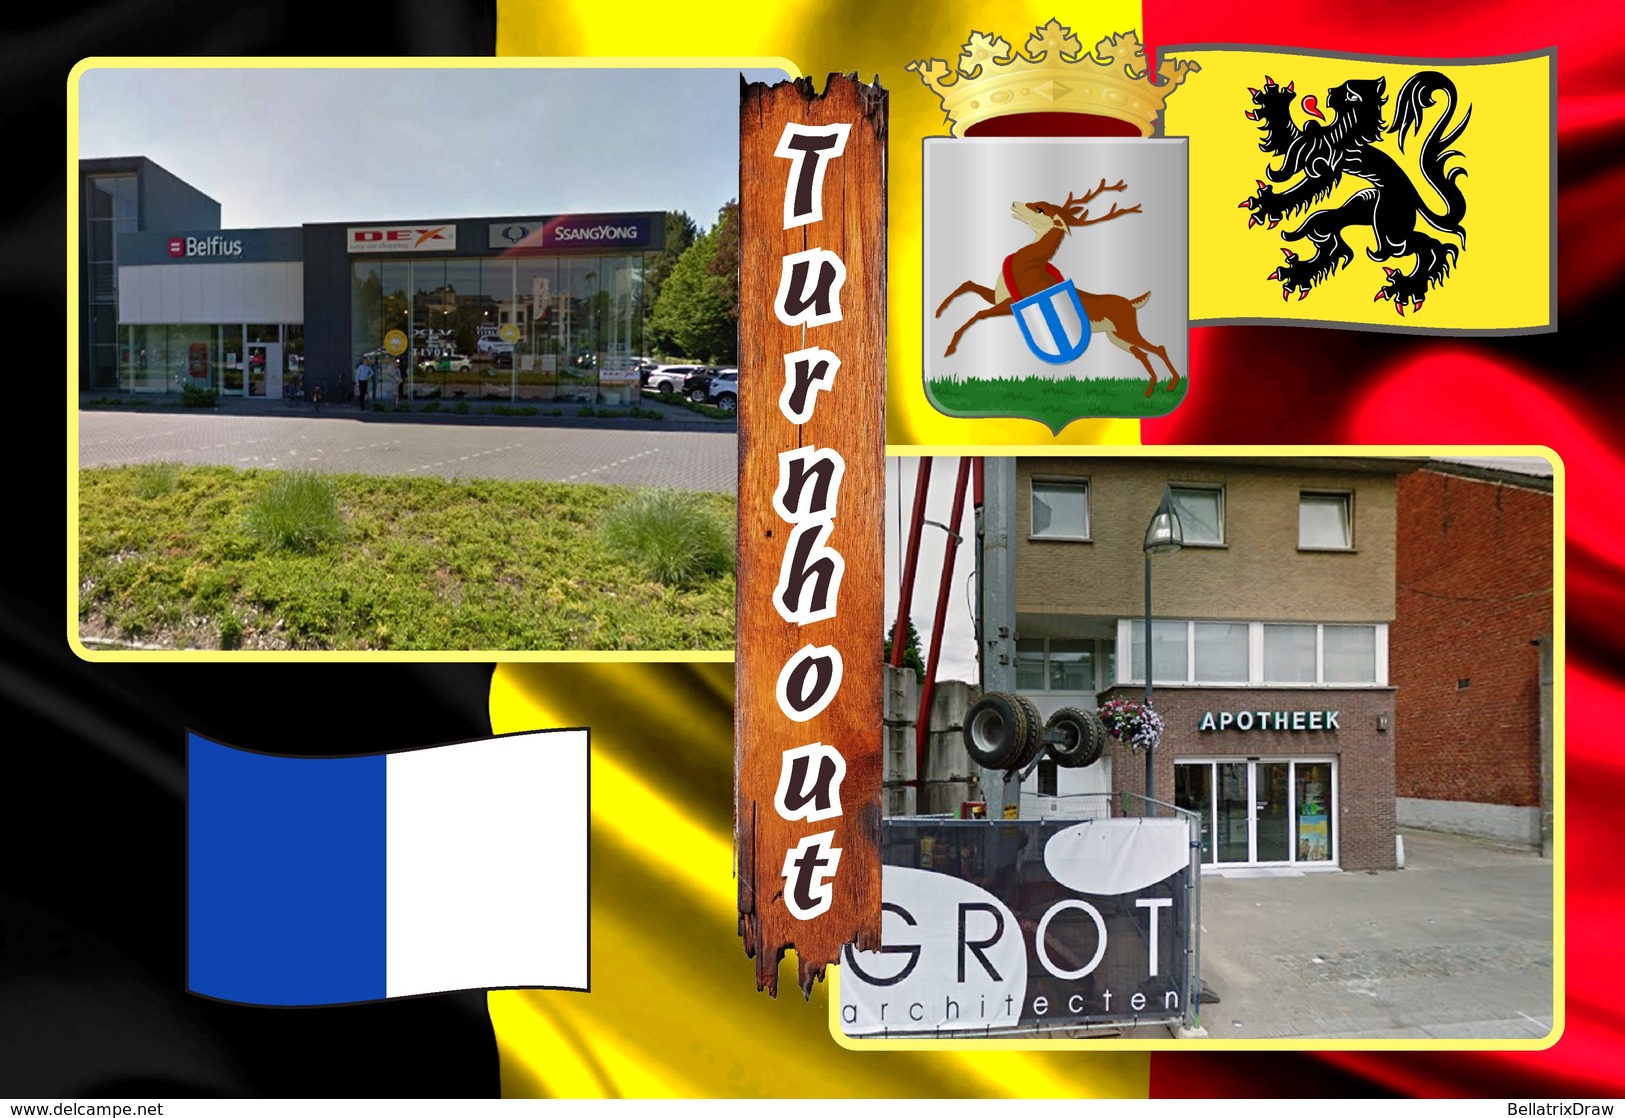 Postcards, REPRODUCTION, Municipalities of Belgium, Turnhout, duplex IX, 51 pcs. (397 to 447)